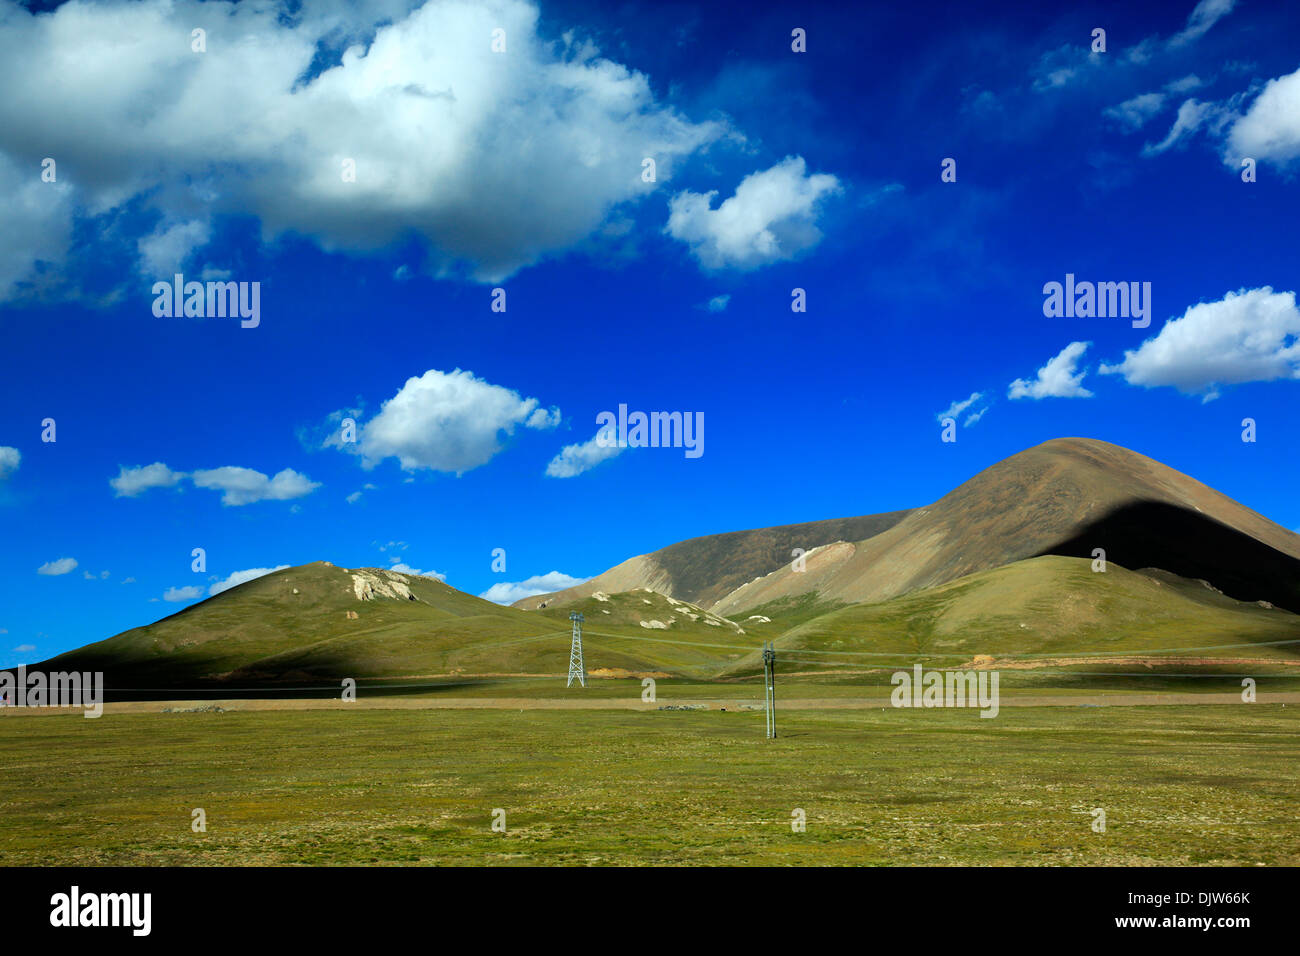 Landscape viewed from train of Trans-Tibetan Railway, Tibet, China Stock Photo